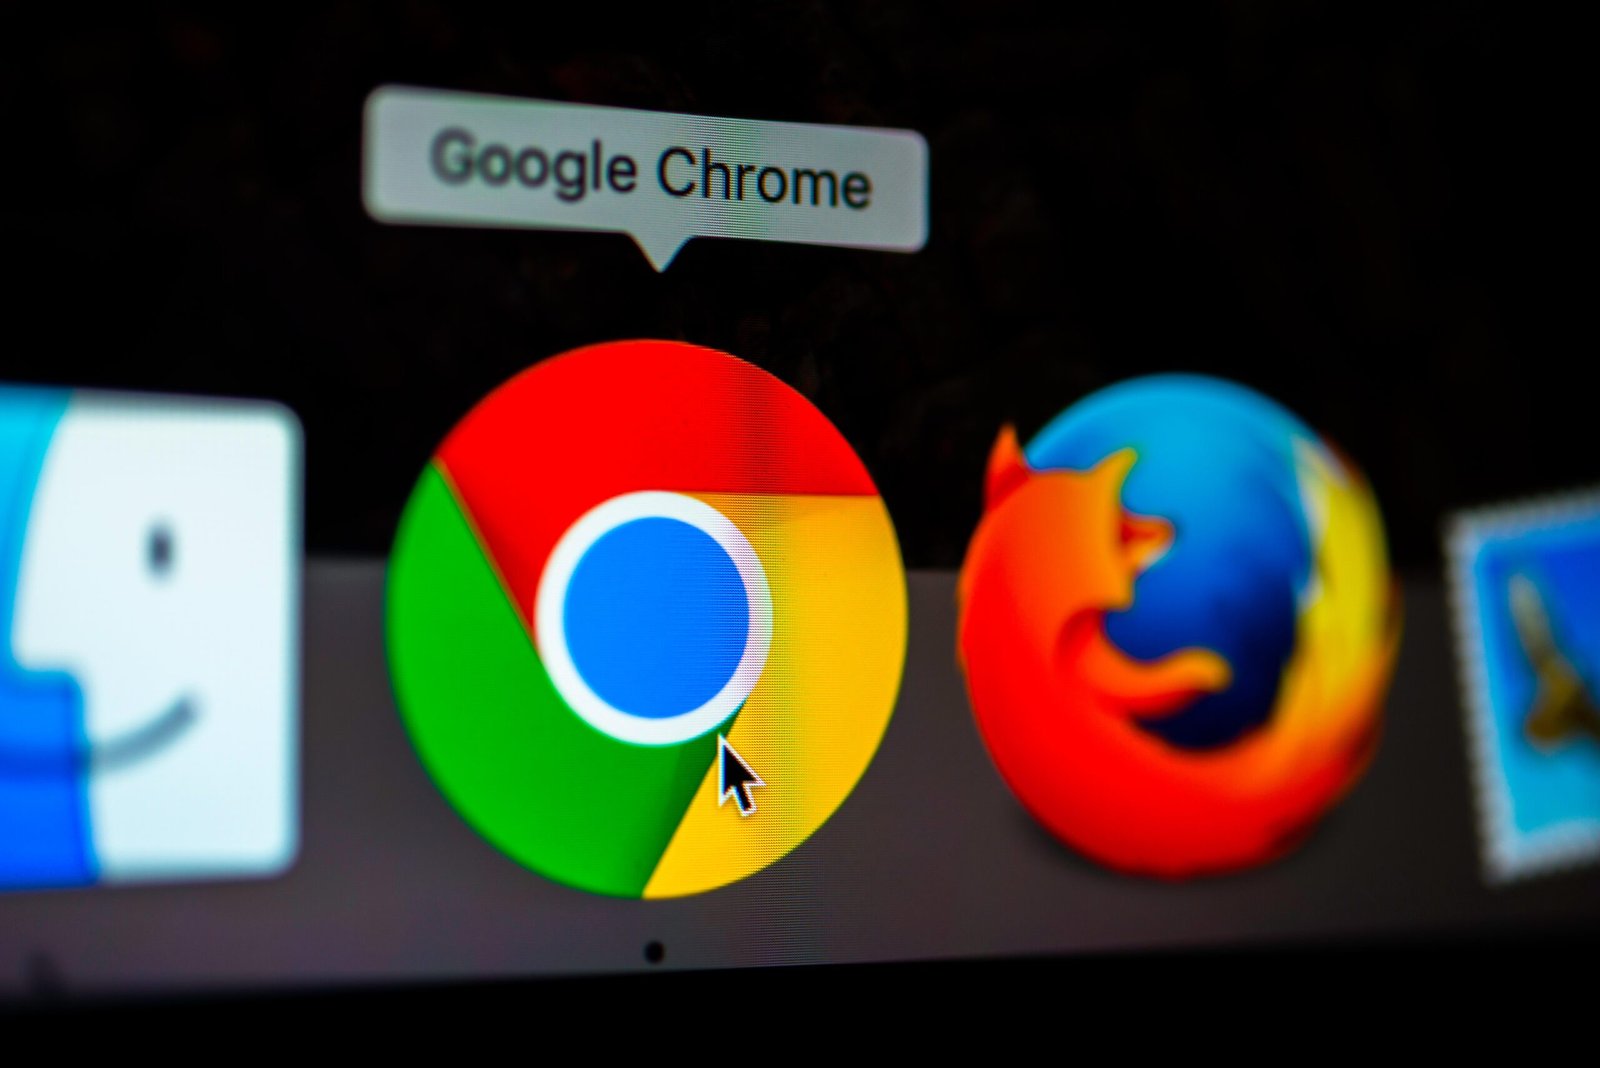 Google Chrome Drops Browser Lock Icon – Source: www.darkreading.com